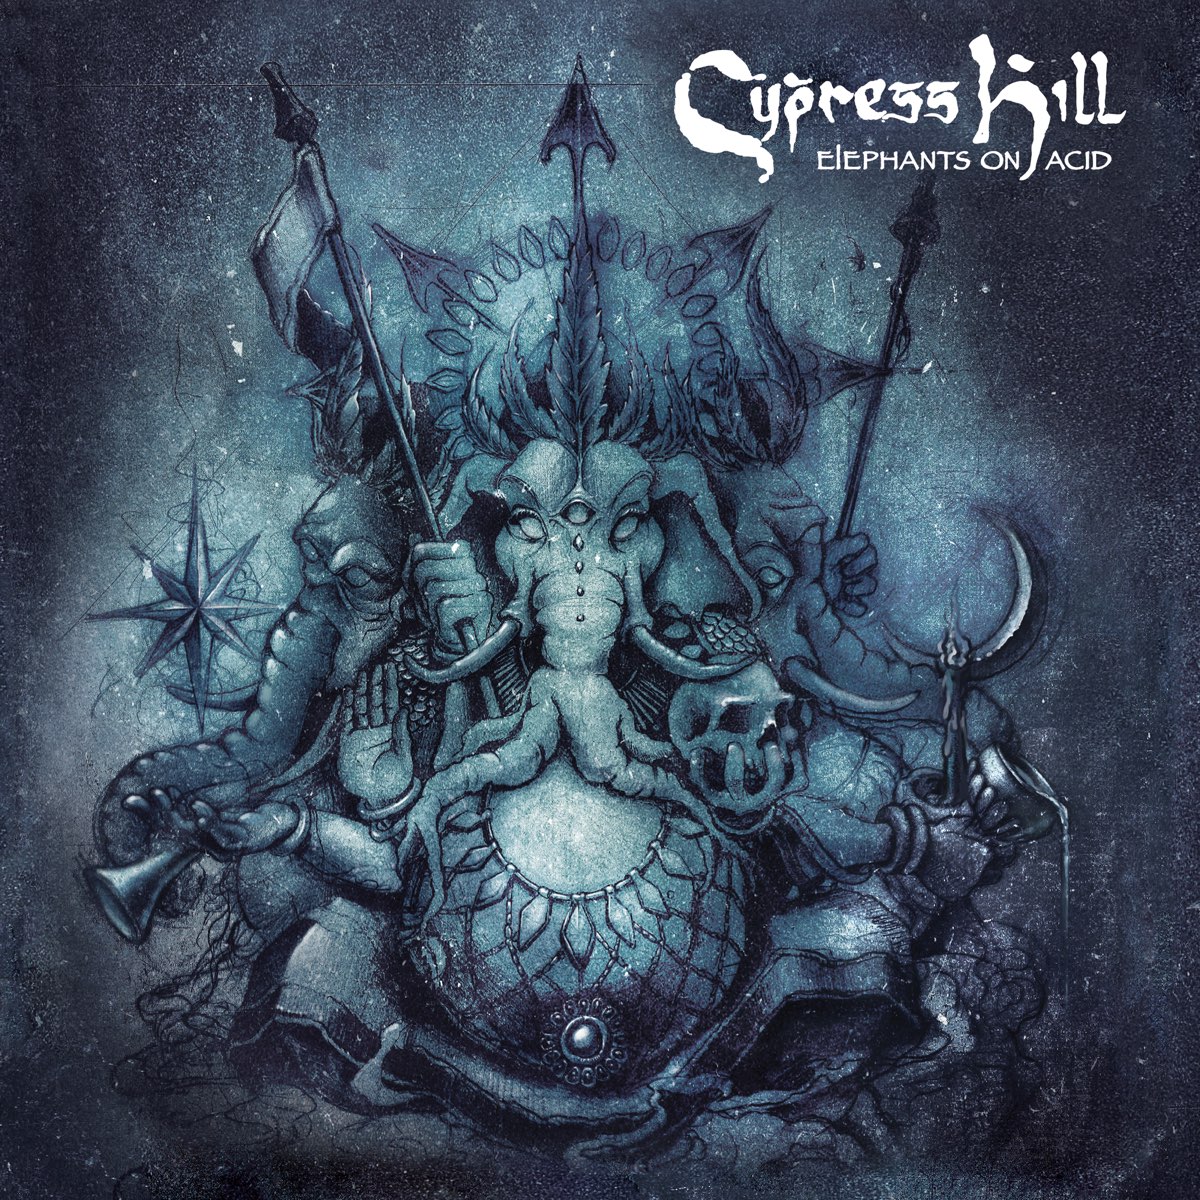 Elephants on Acid by Cypress Hill on Apple Music